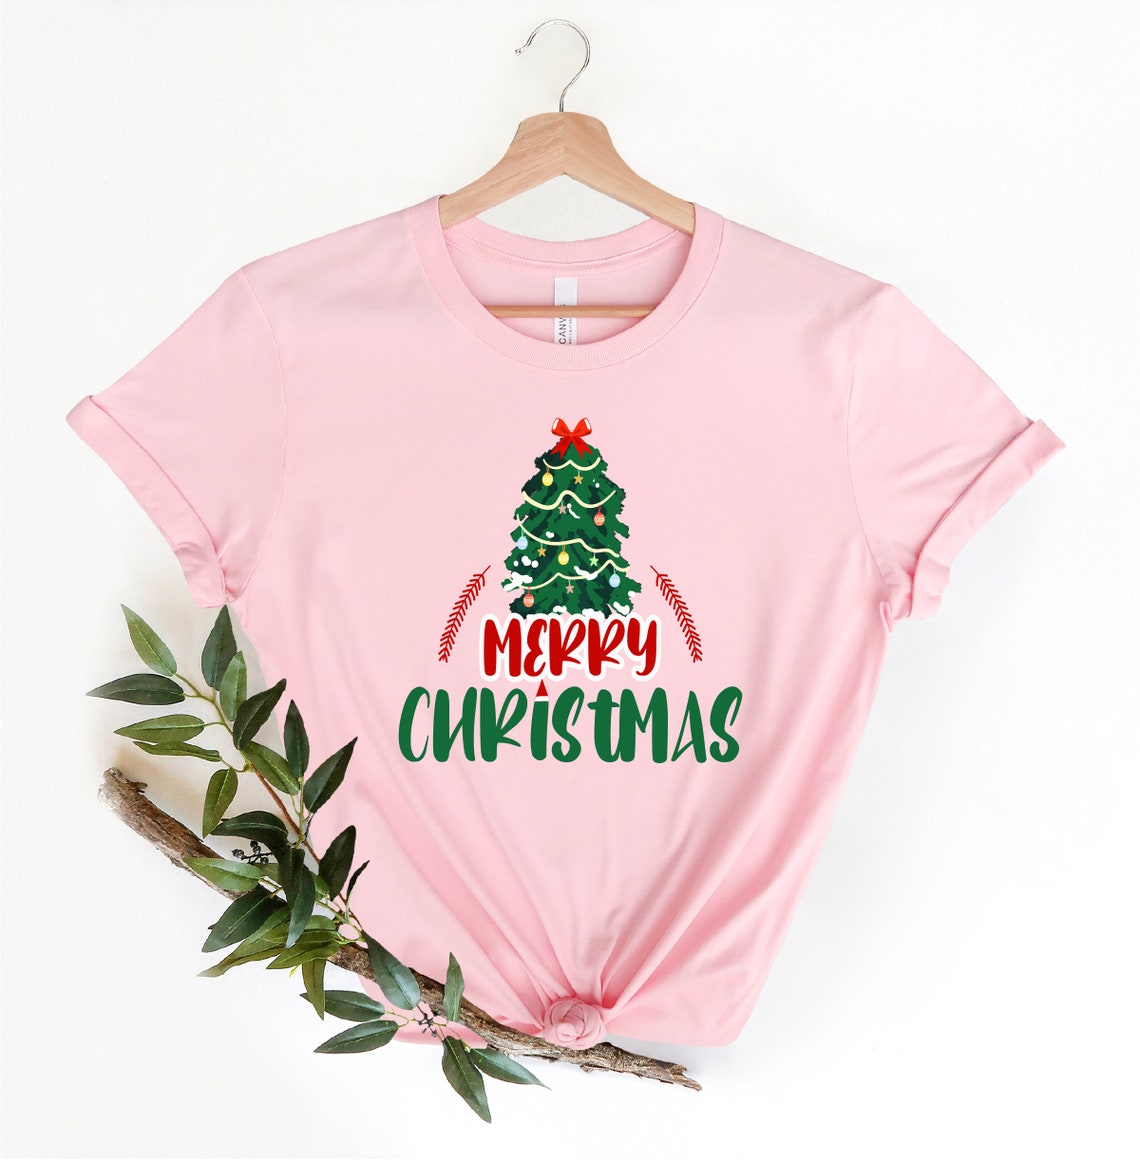 Ladies Merry Christmas Shirt, Women Holiday Shirt, Women Christmas Shirt, Cute Christmas Shirt, Cute Christmas Tree Shirt, Lady Christmas